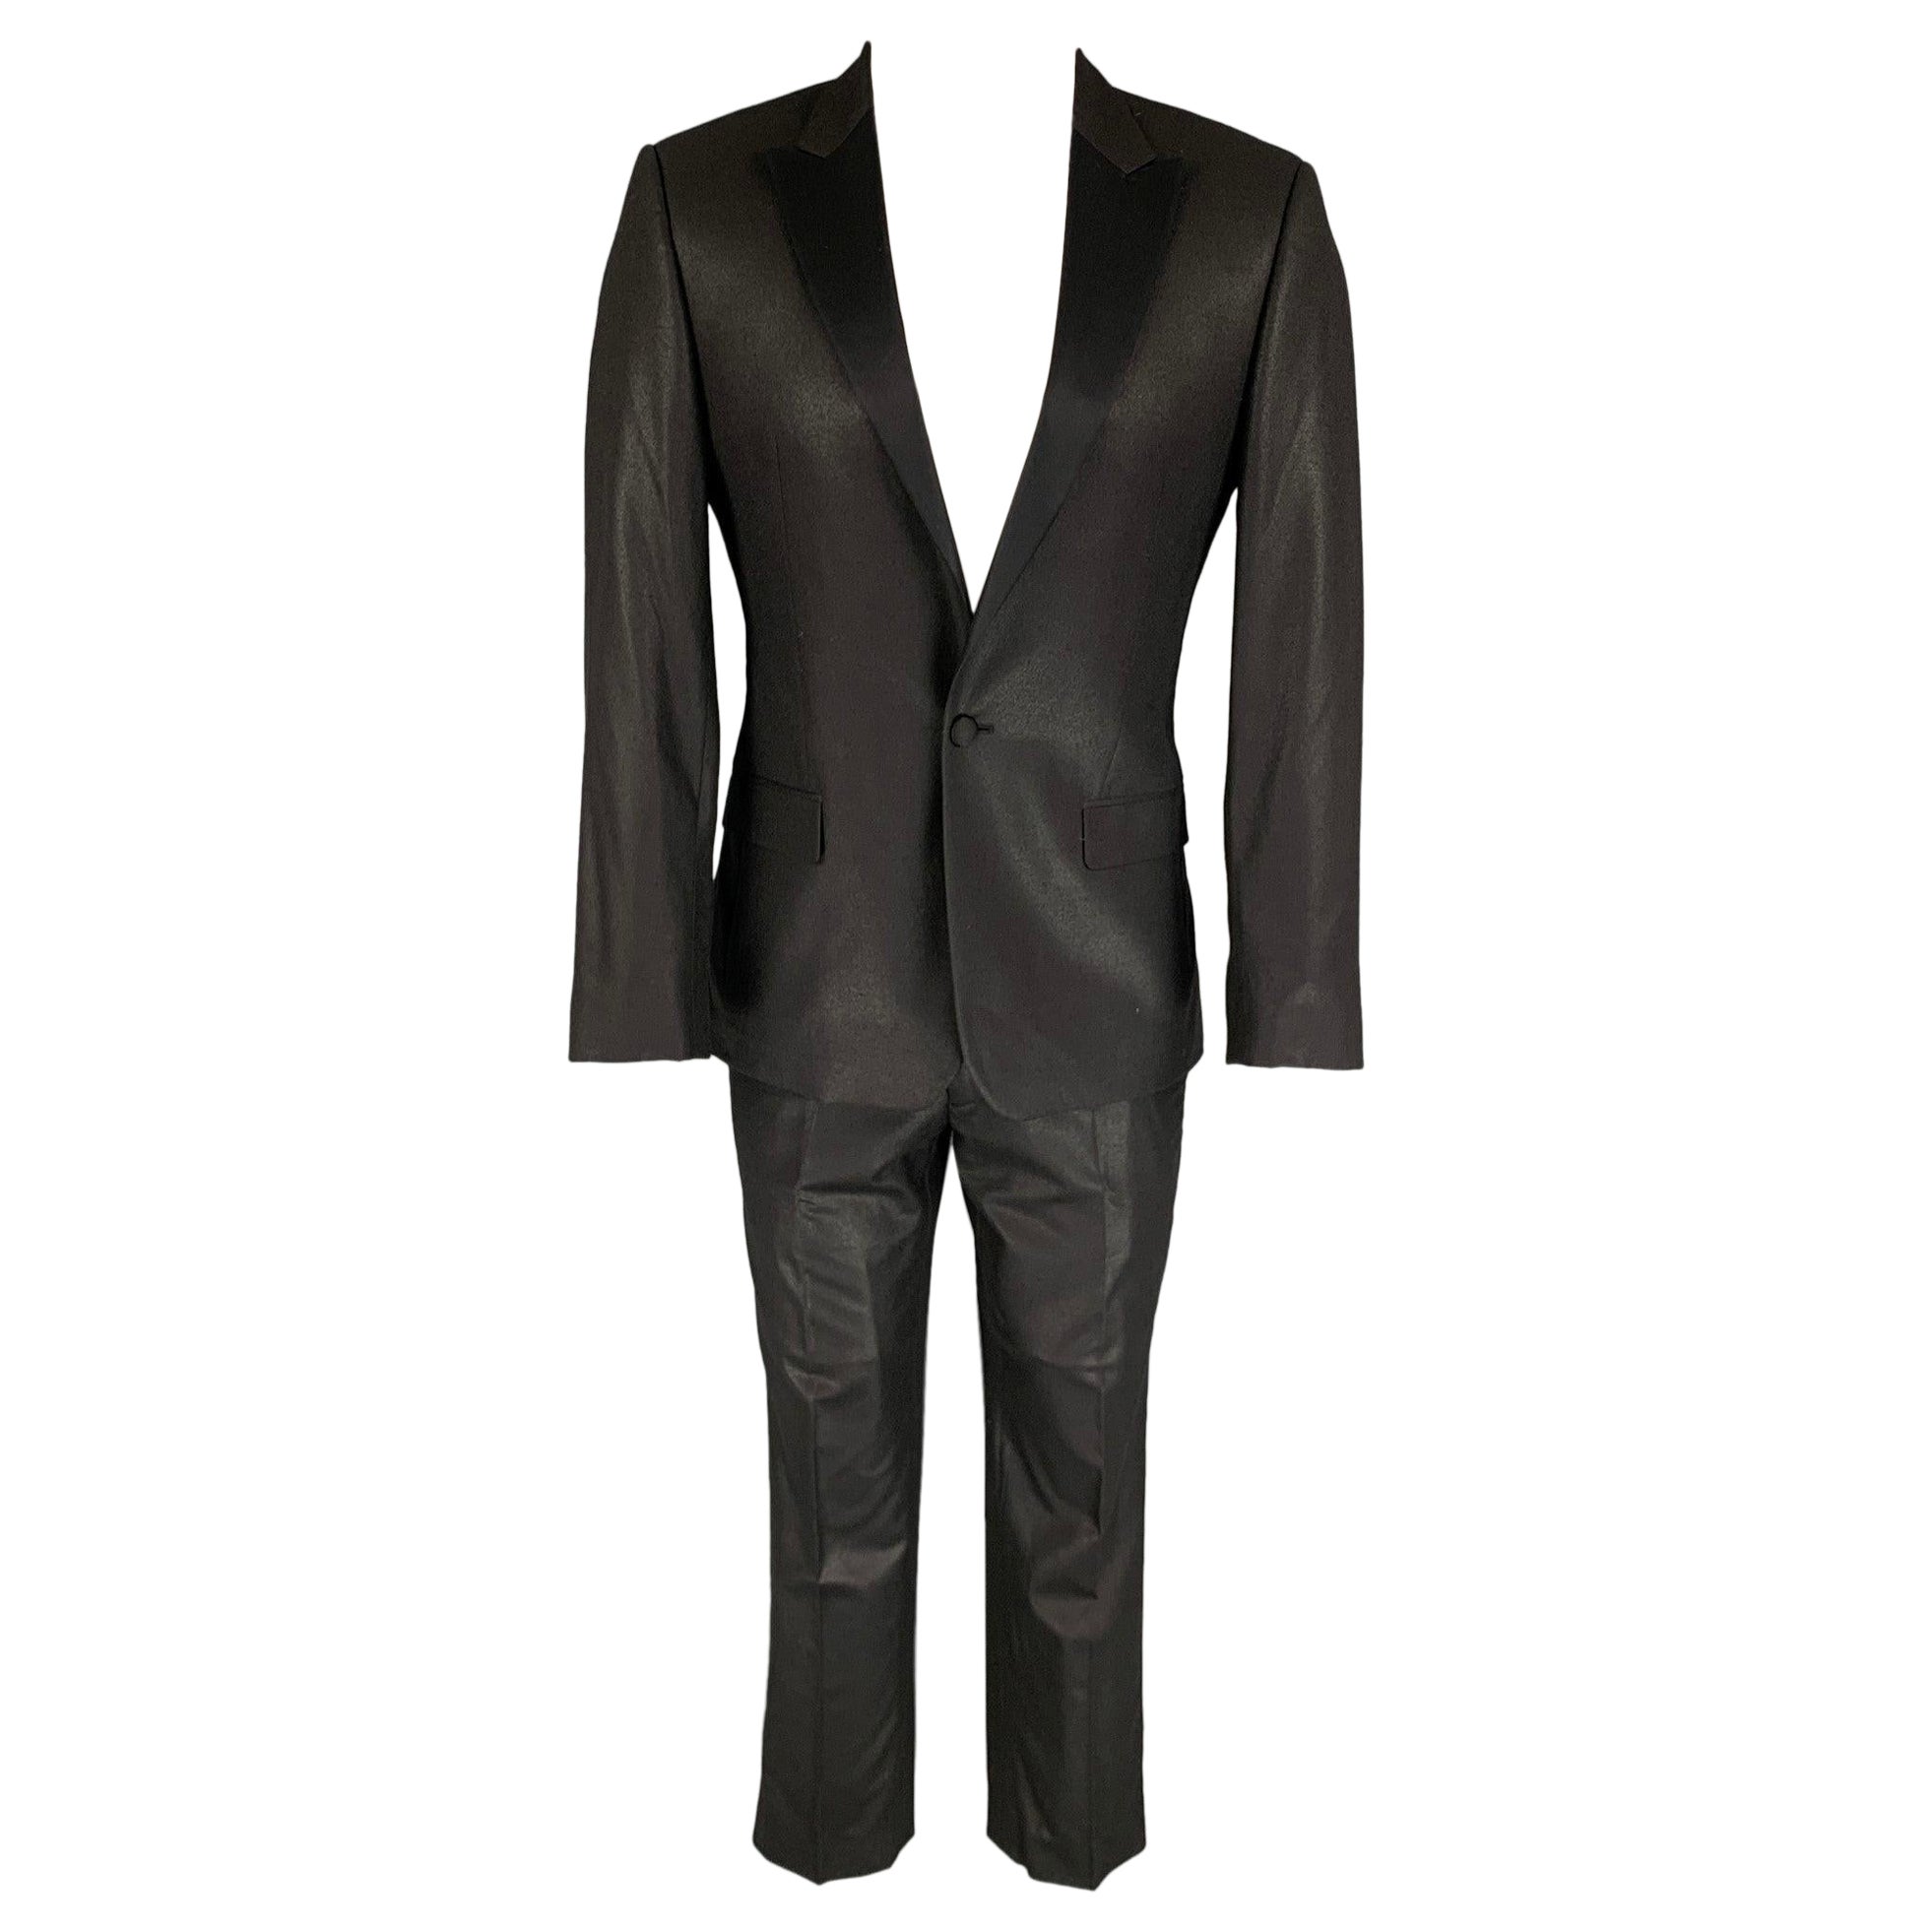 CALVIN KLEIN COLLECTION Size 36 Black Sparkle Wool Peak Lapel Tuxedo For Sale